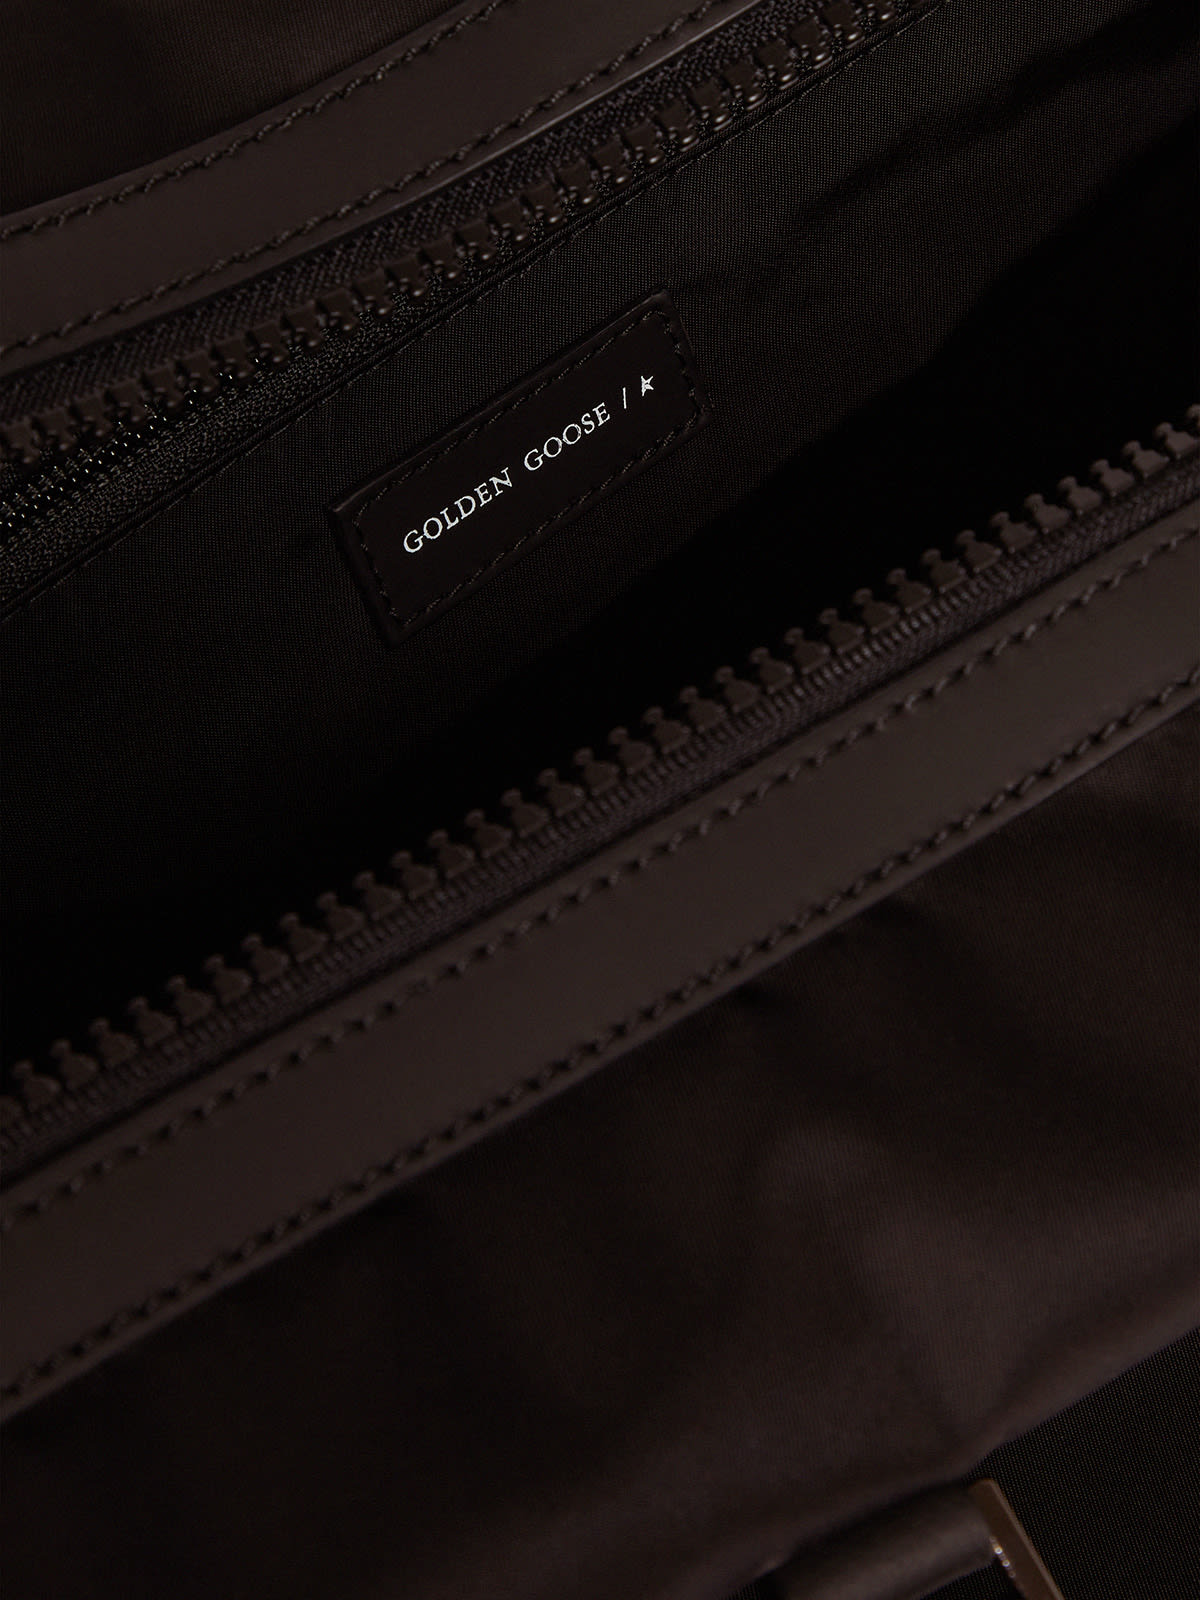 Golden Goose - Journey Duffle Bag in black nylon in 